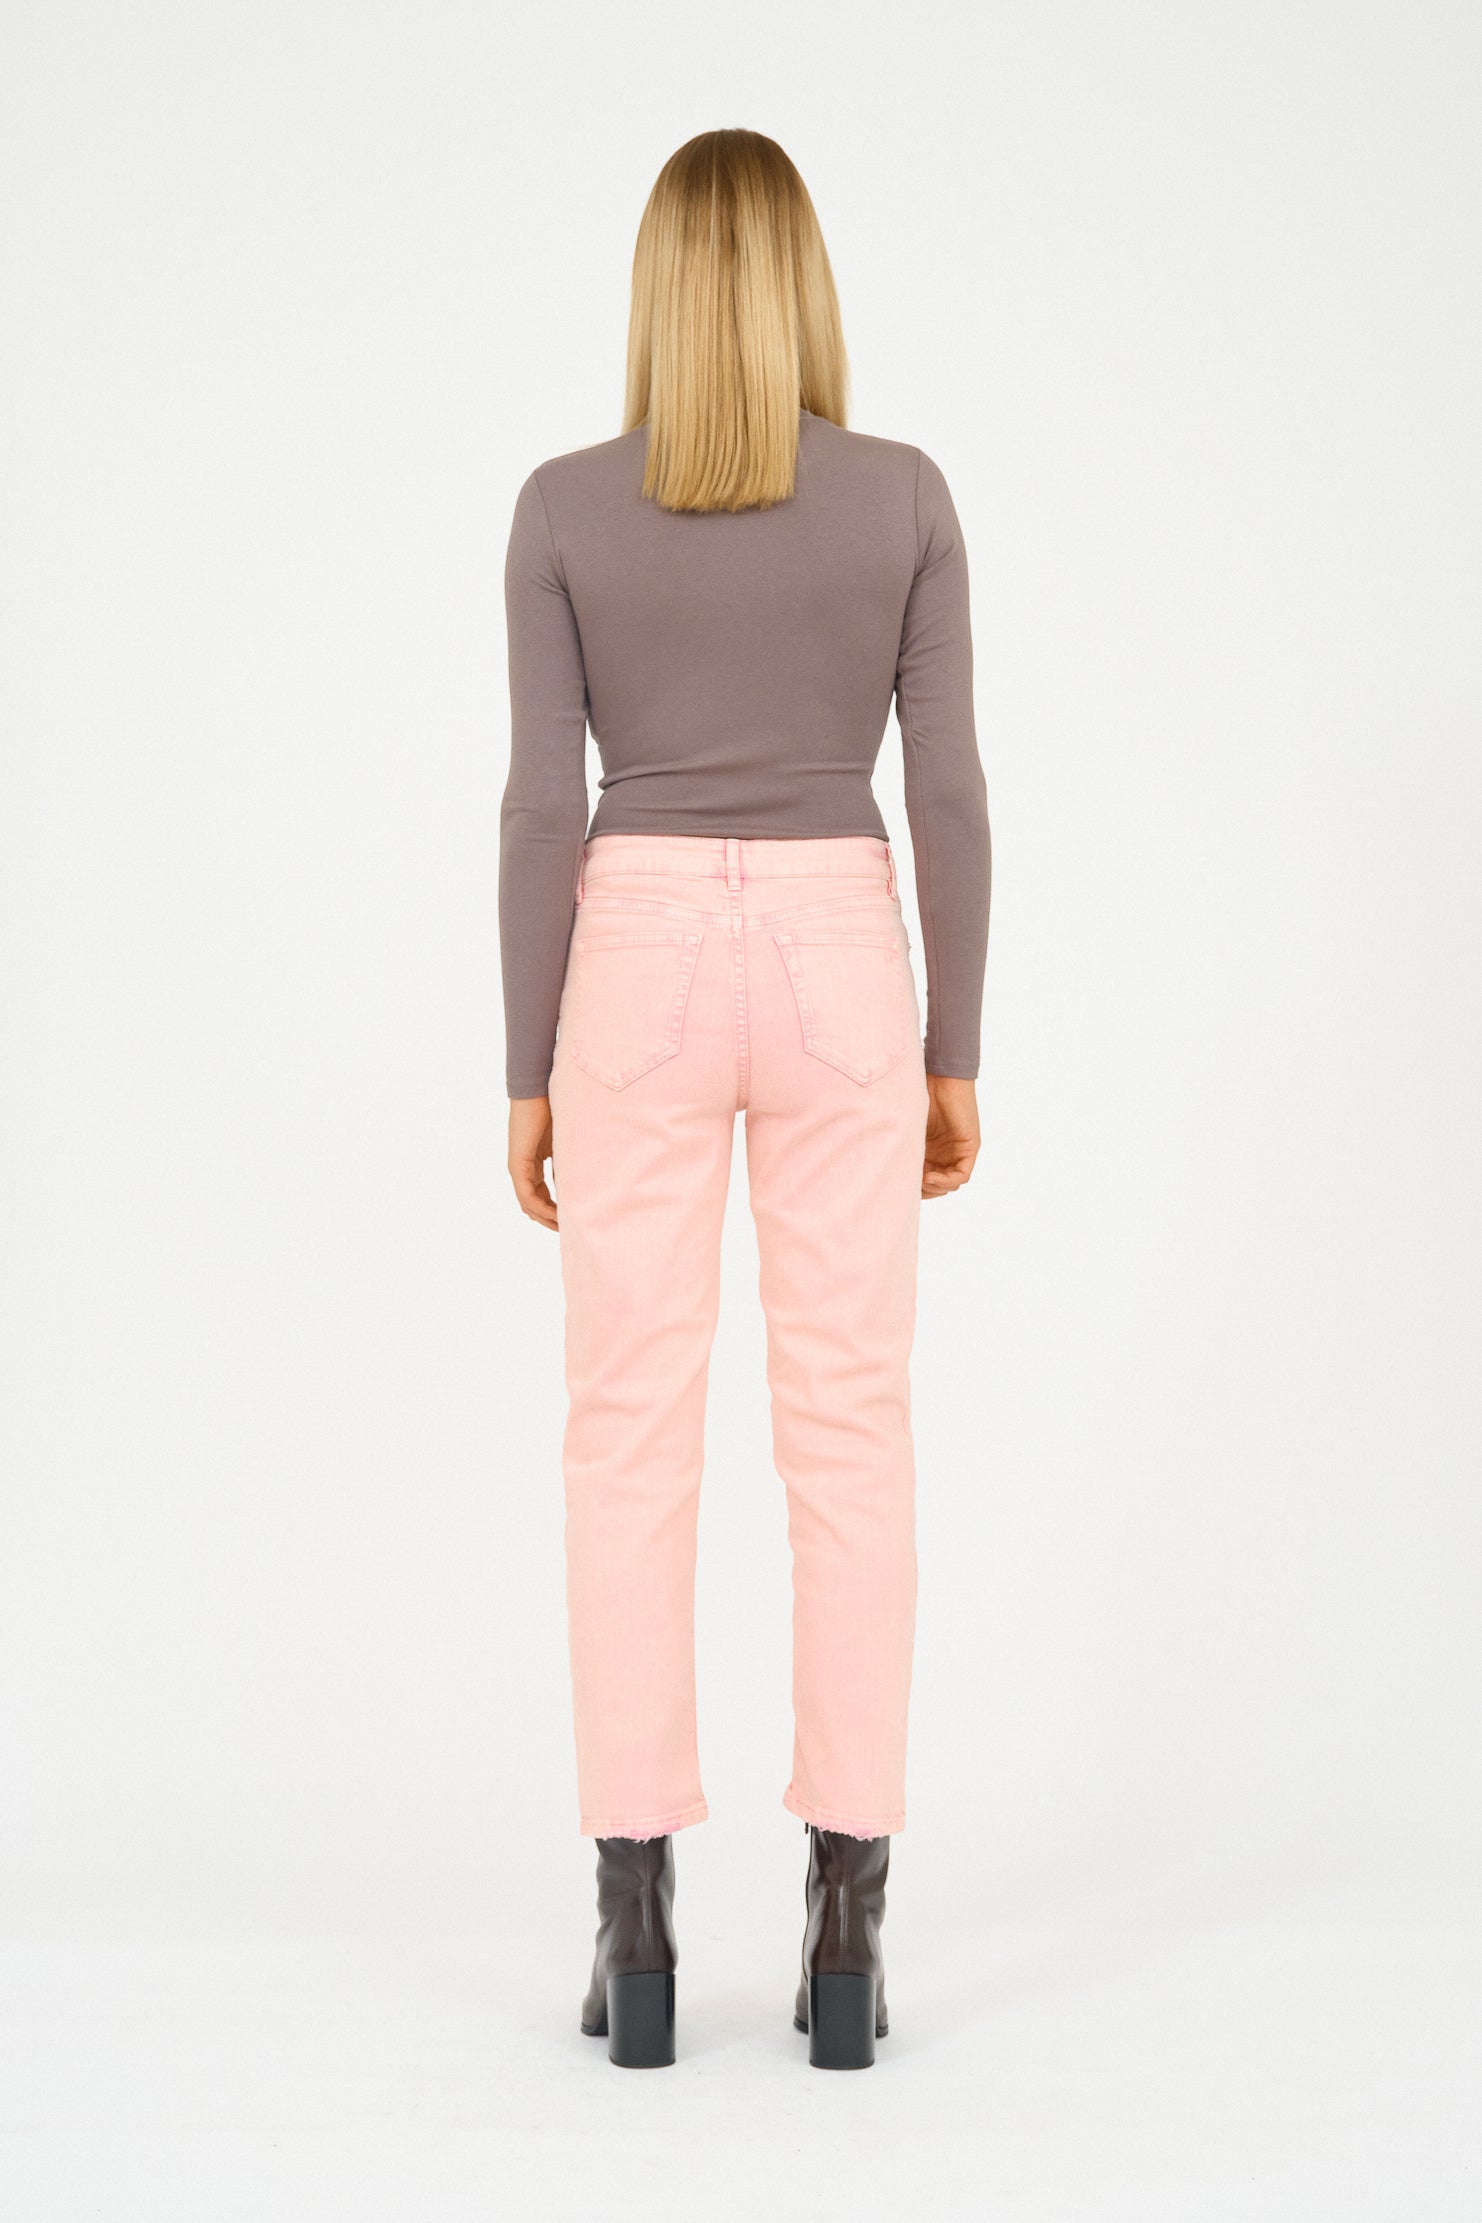 IVY Copenhagen IVY-Tonya Jeans Stone Lip Stick Pink Jeans & Pants 380 Lipstick Pink